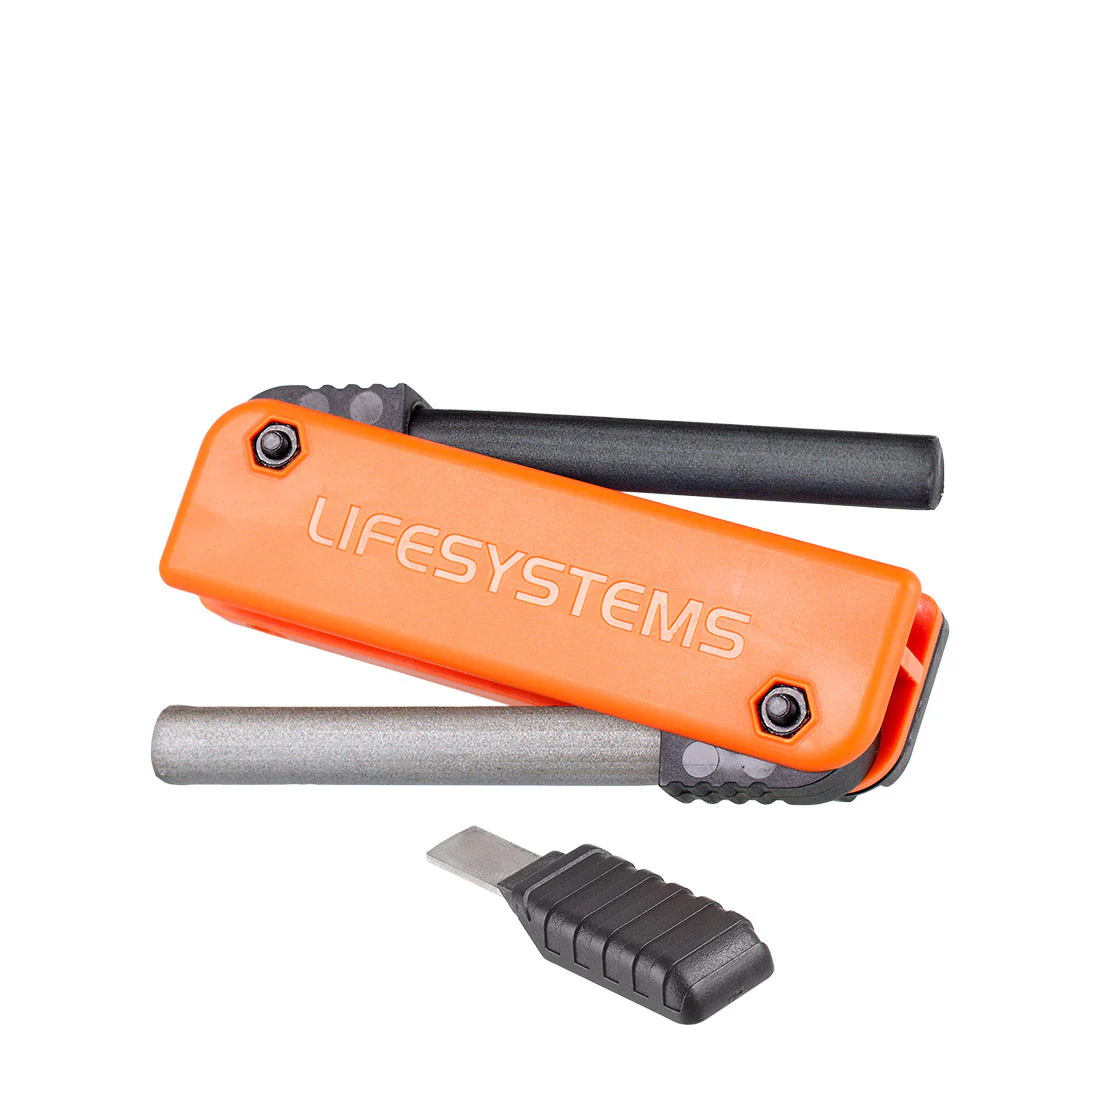 Lifesystems Dual Action Firestarter Orange